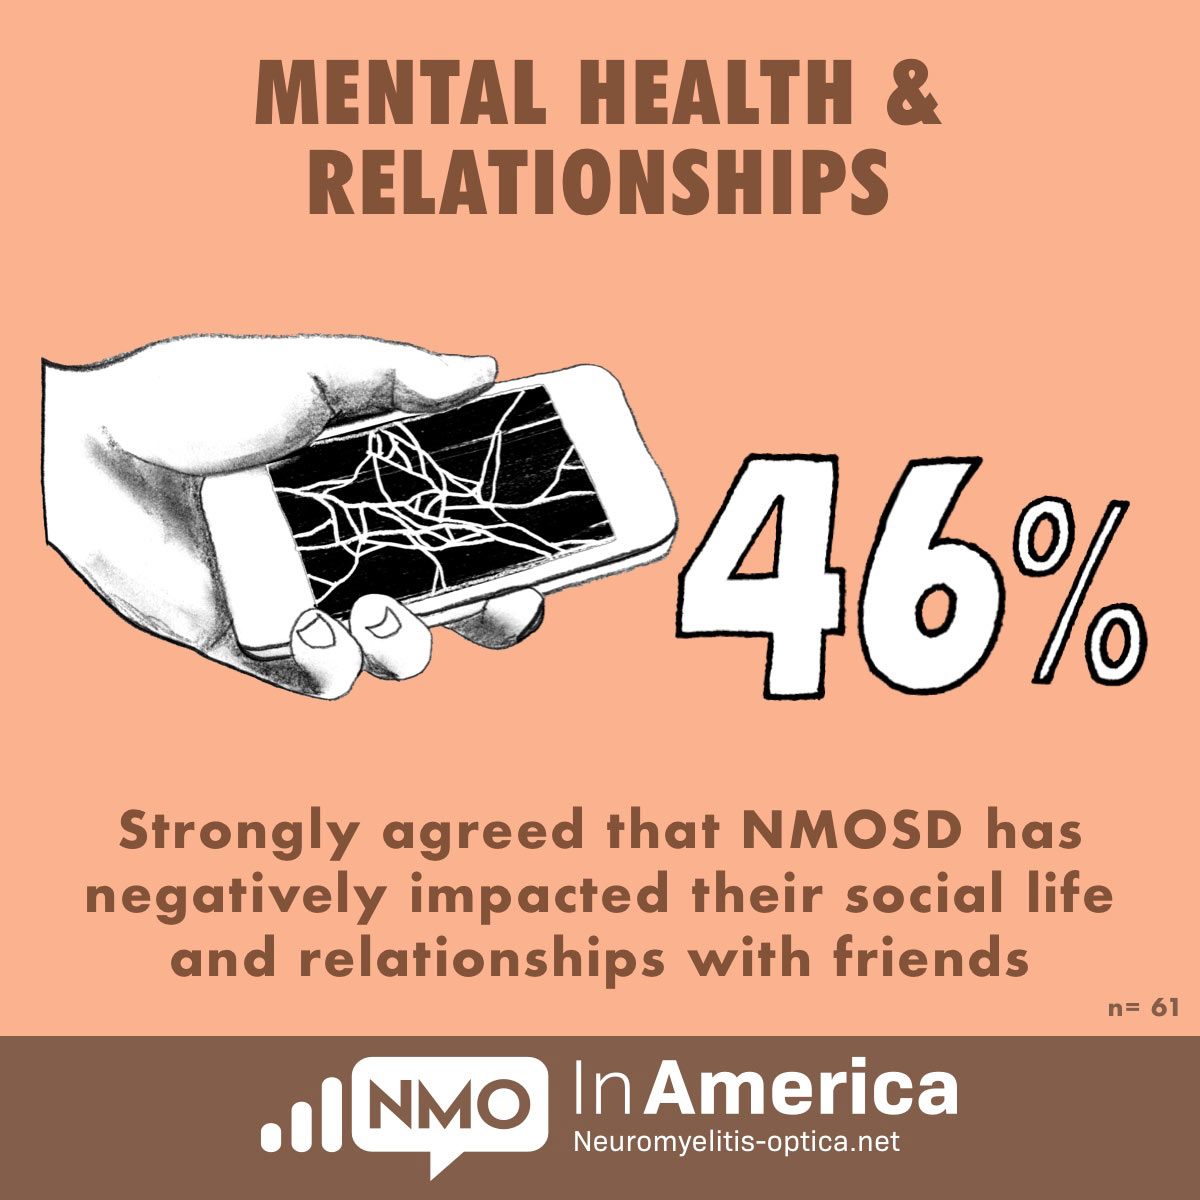 46% say NMOSD has negatively impacted social life